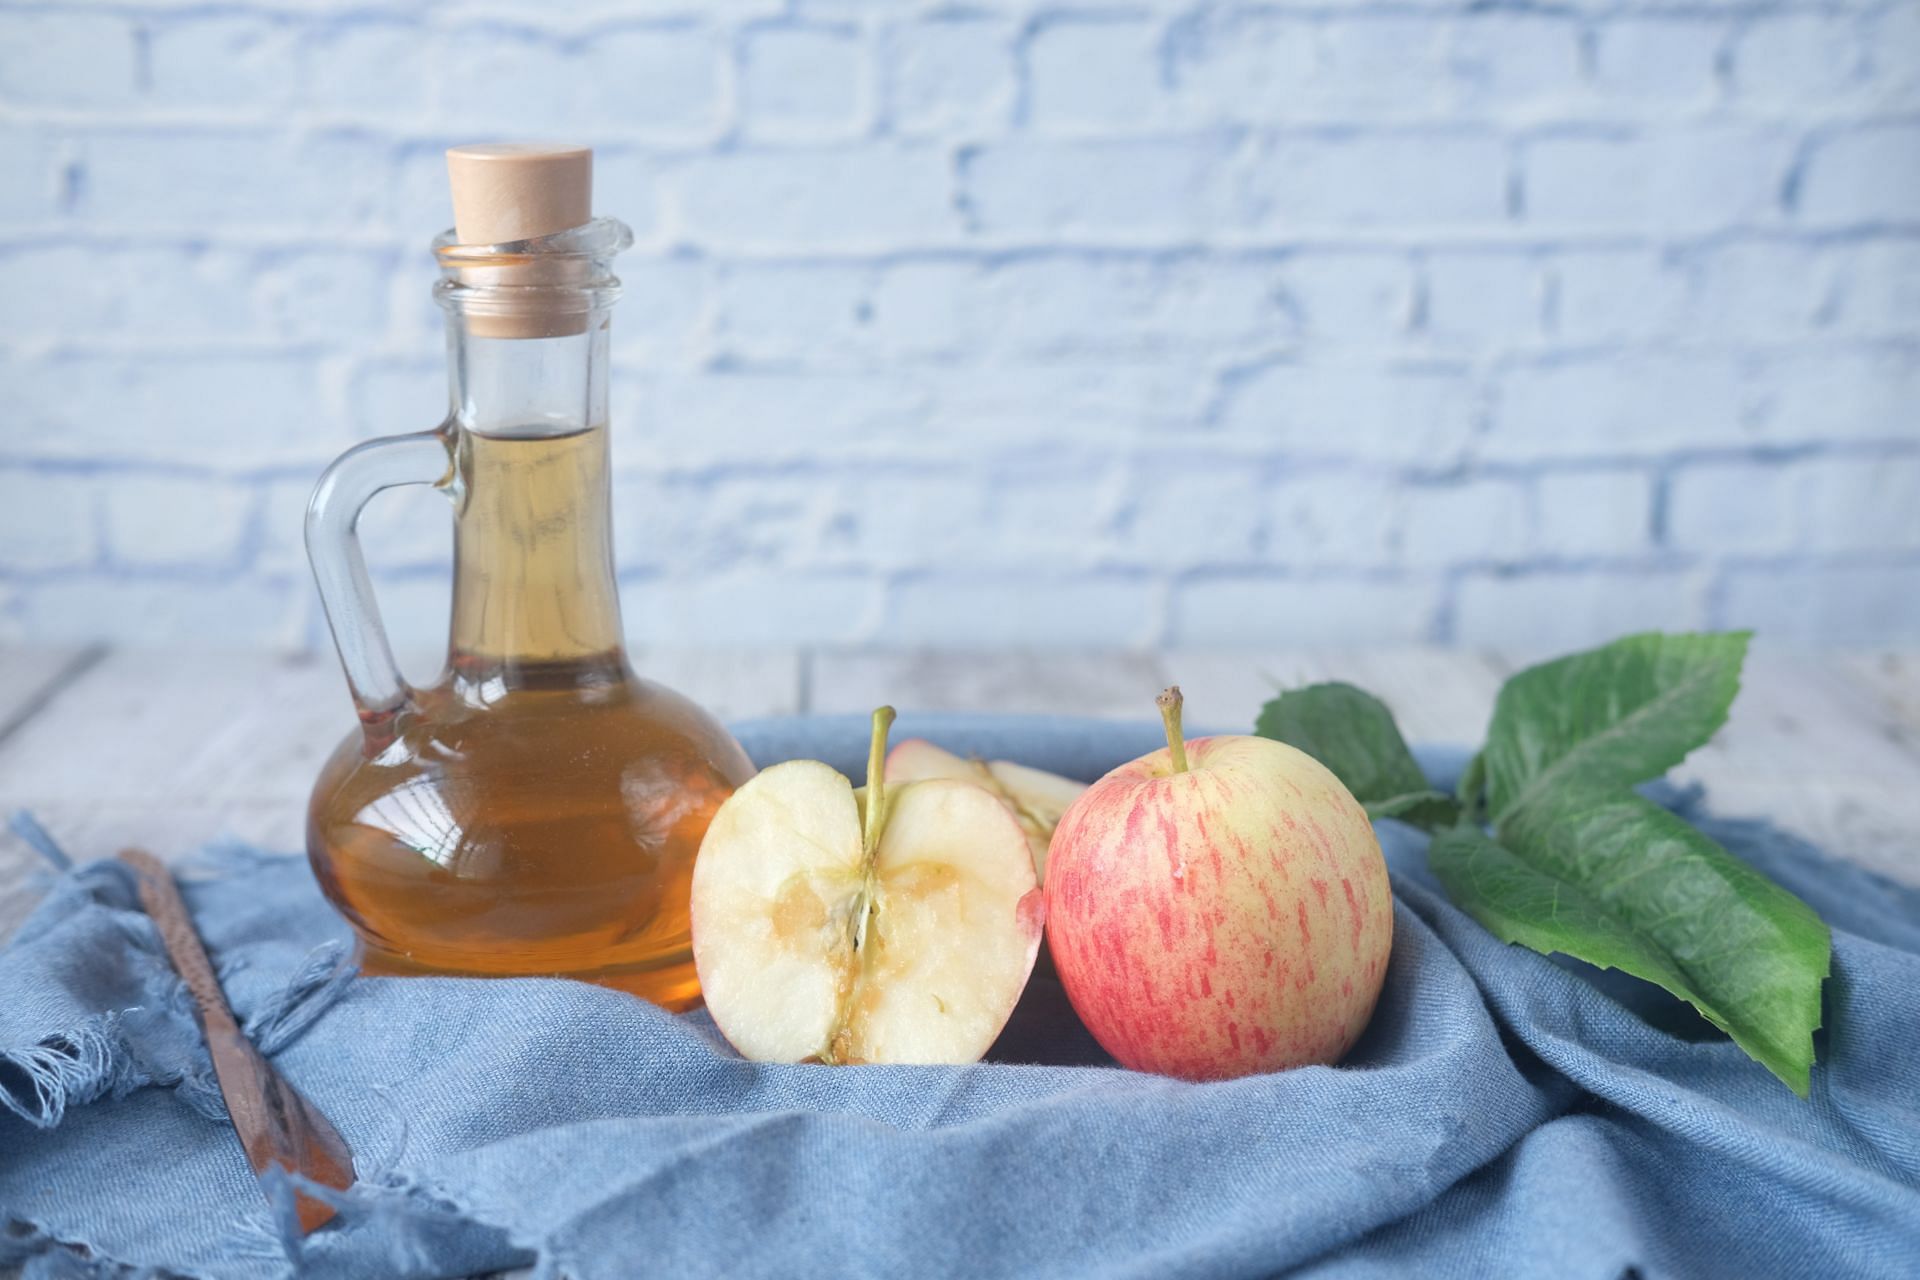 There are several benefits of apple cider vinegar (Image via Unsplash/Towfiqu Barbhuiya)